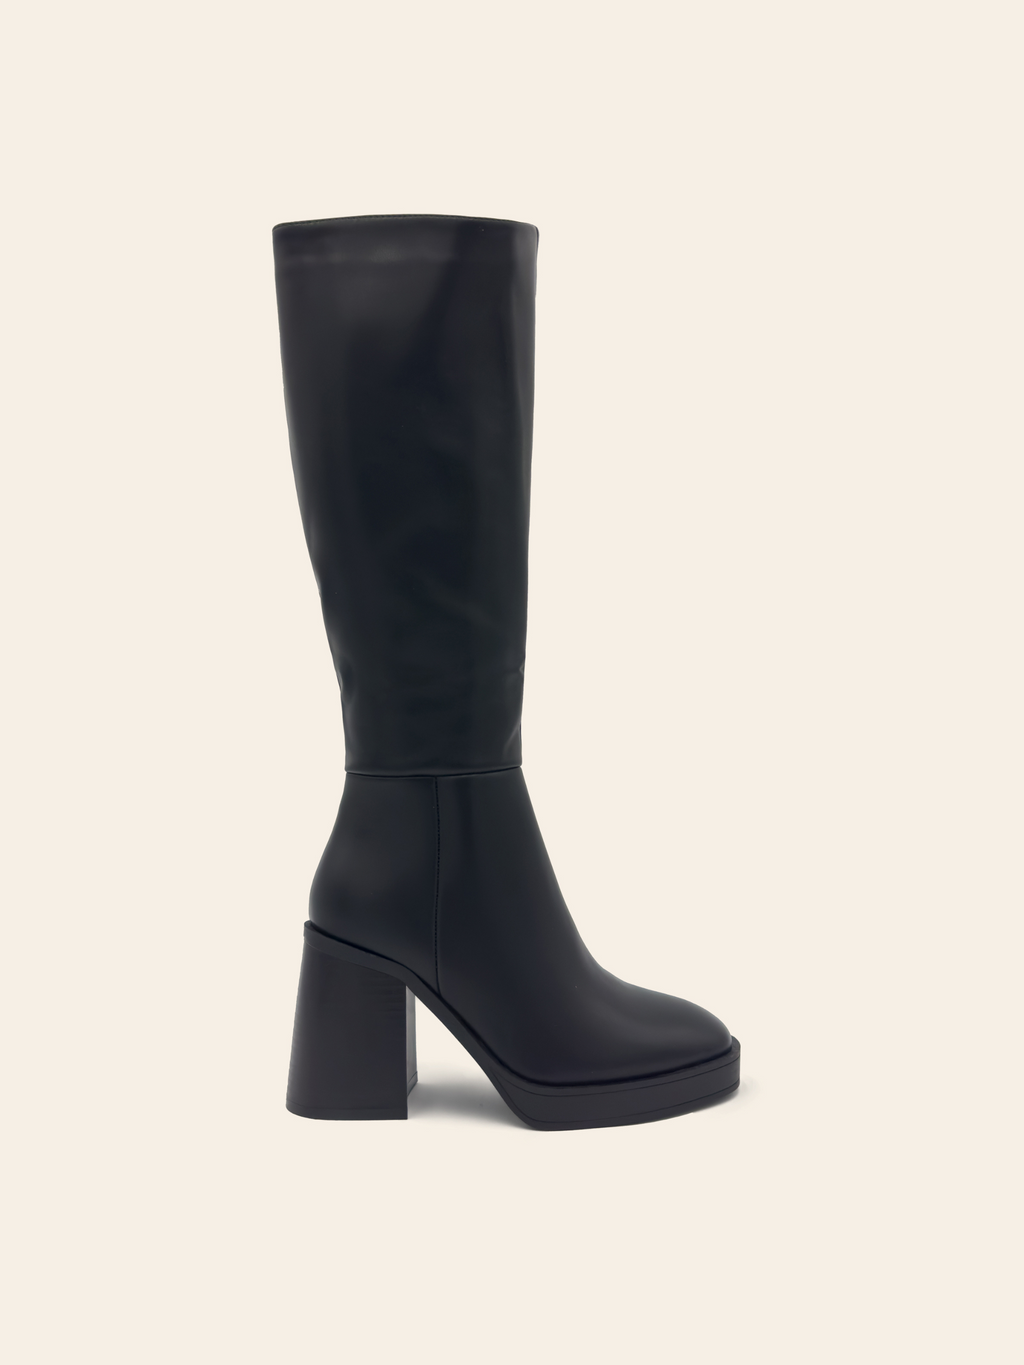 EMILIA - Black chunky heel platform boots